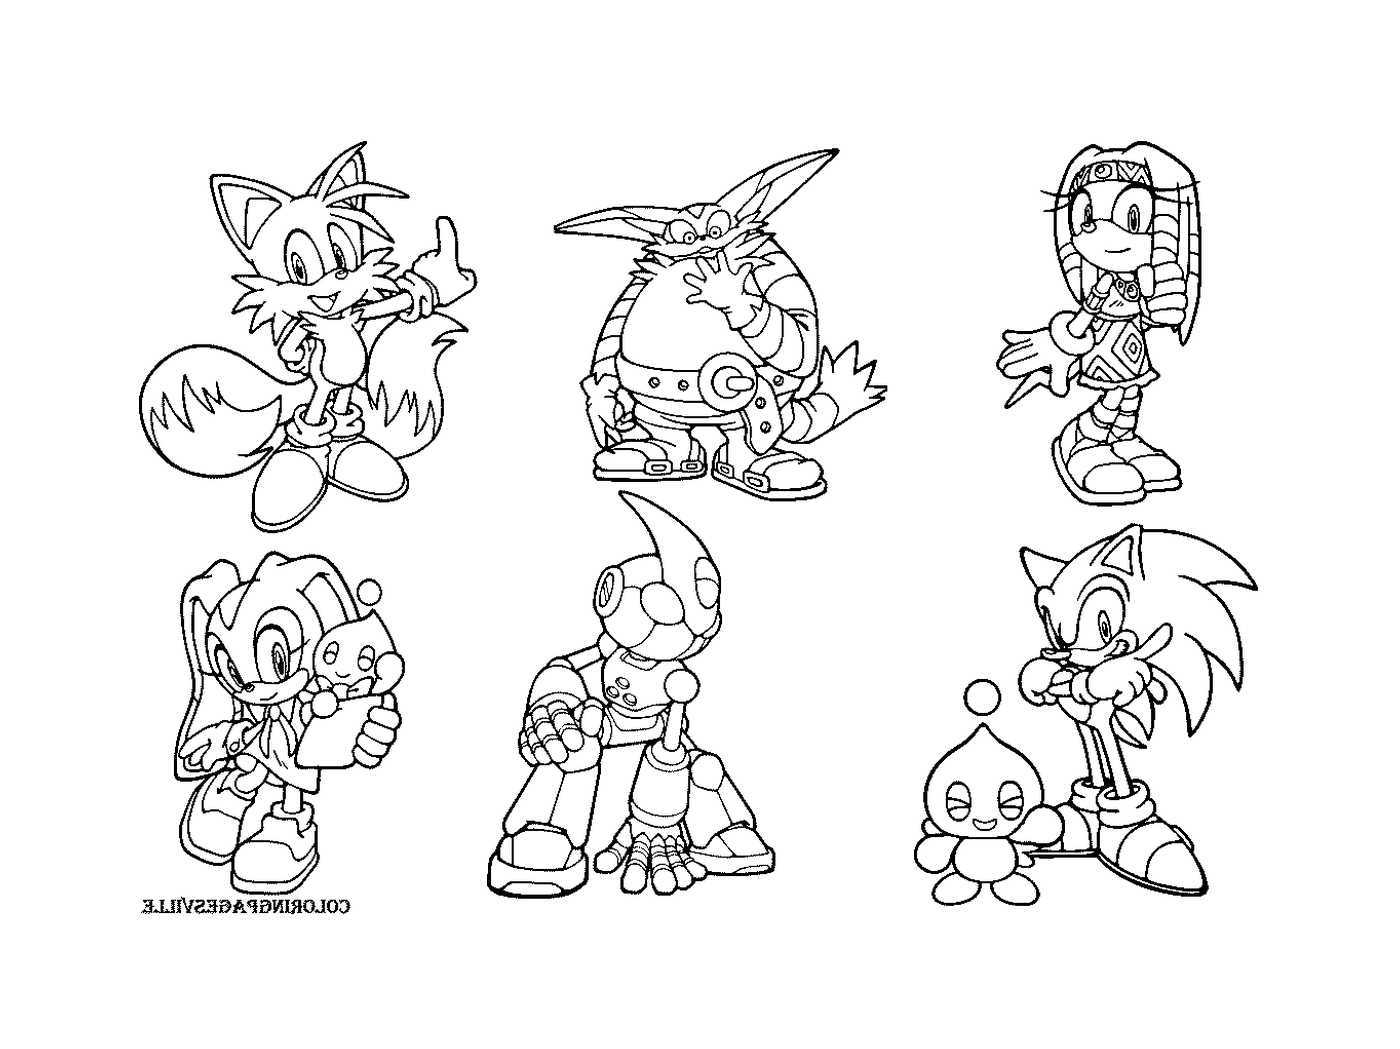  A set of six cartoon characters 